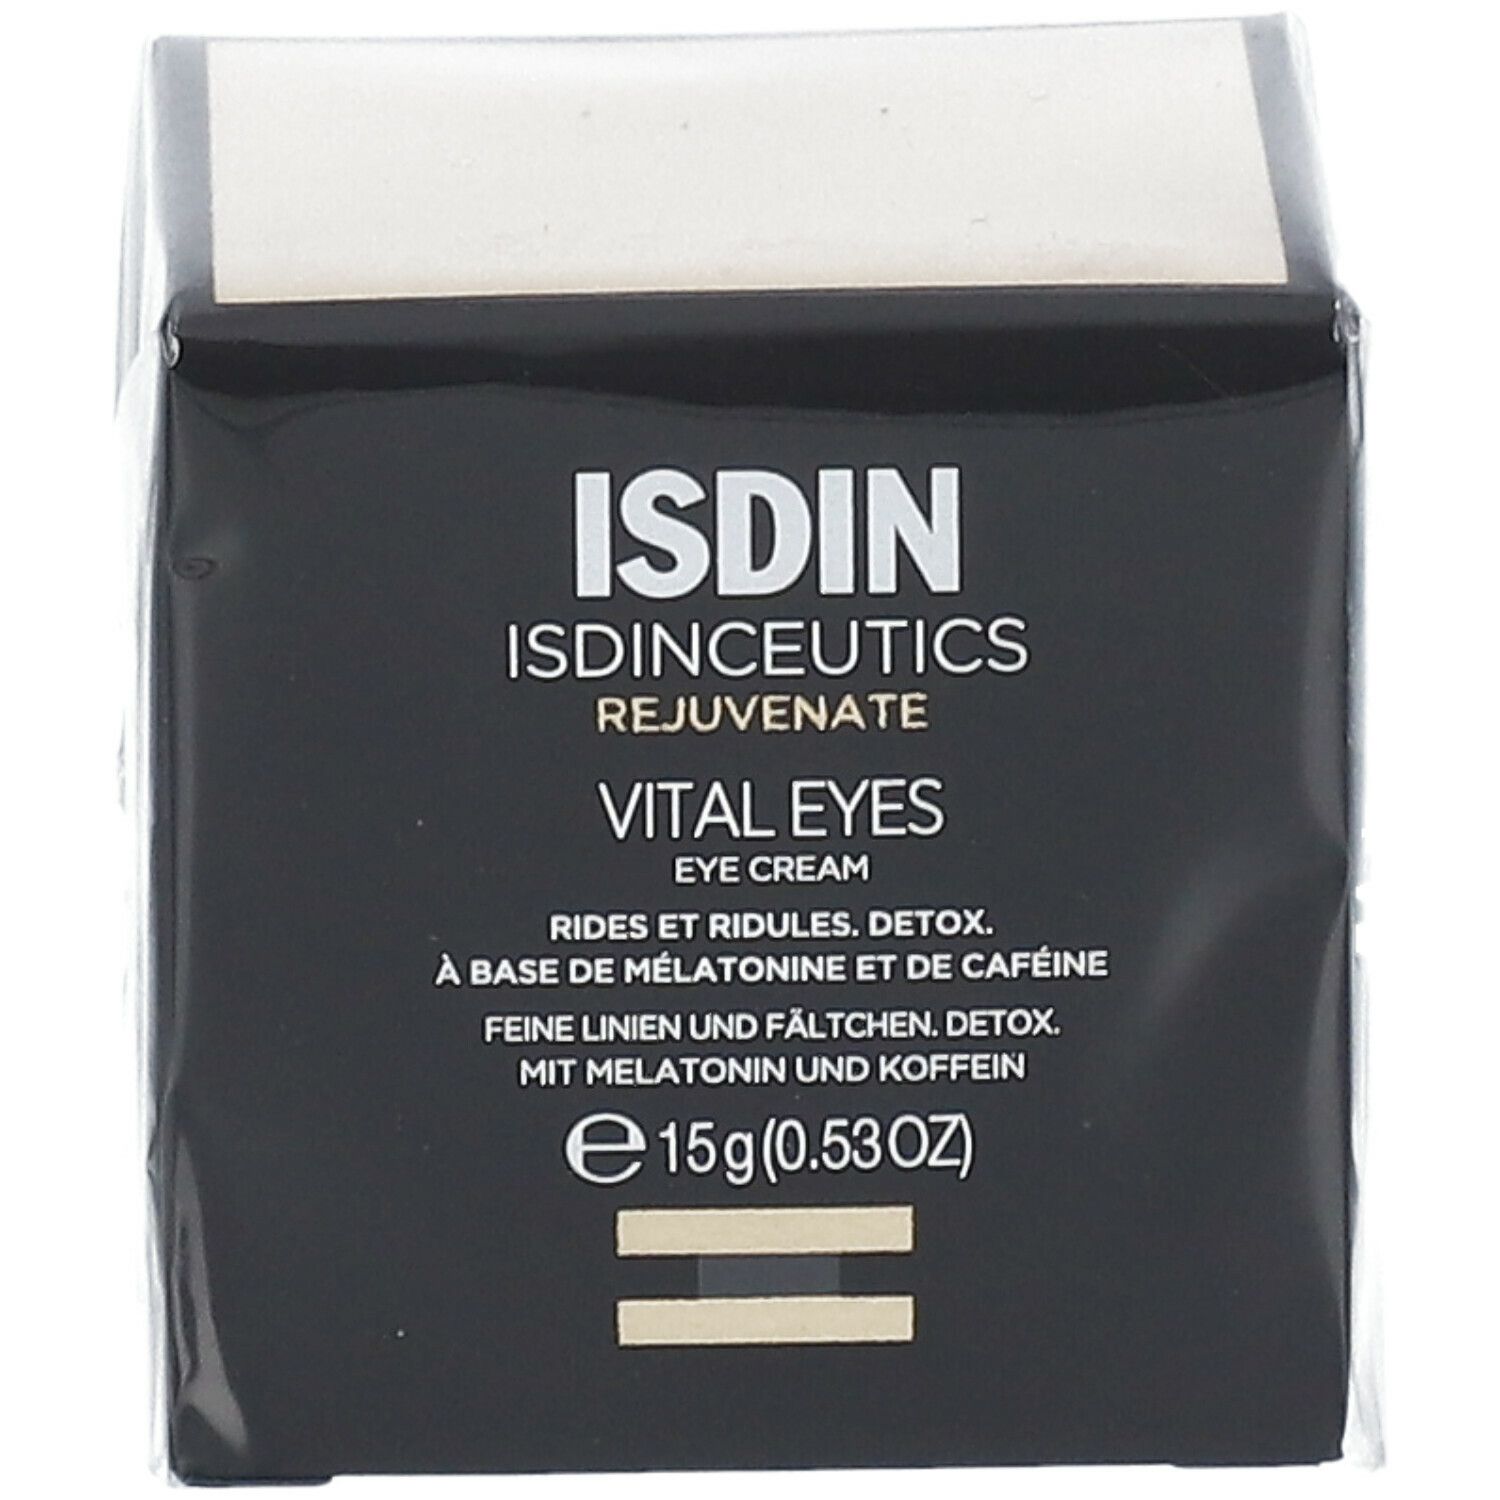 ISDIN® Isdinceutics Vital Eyes